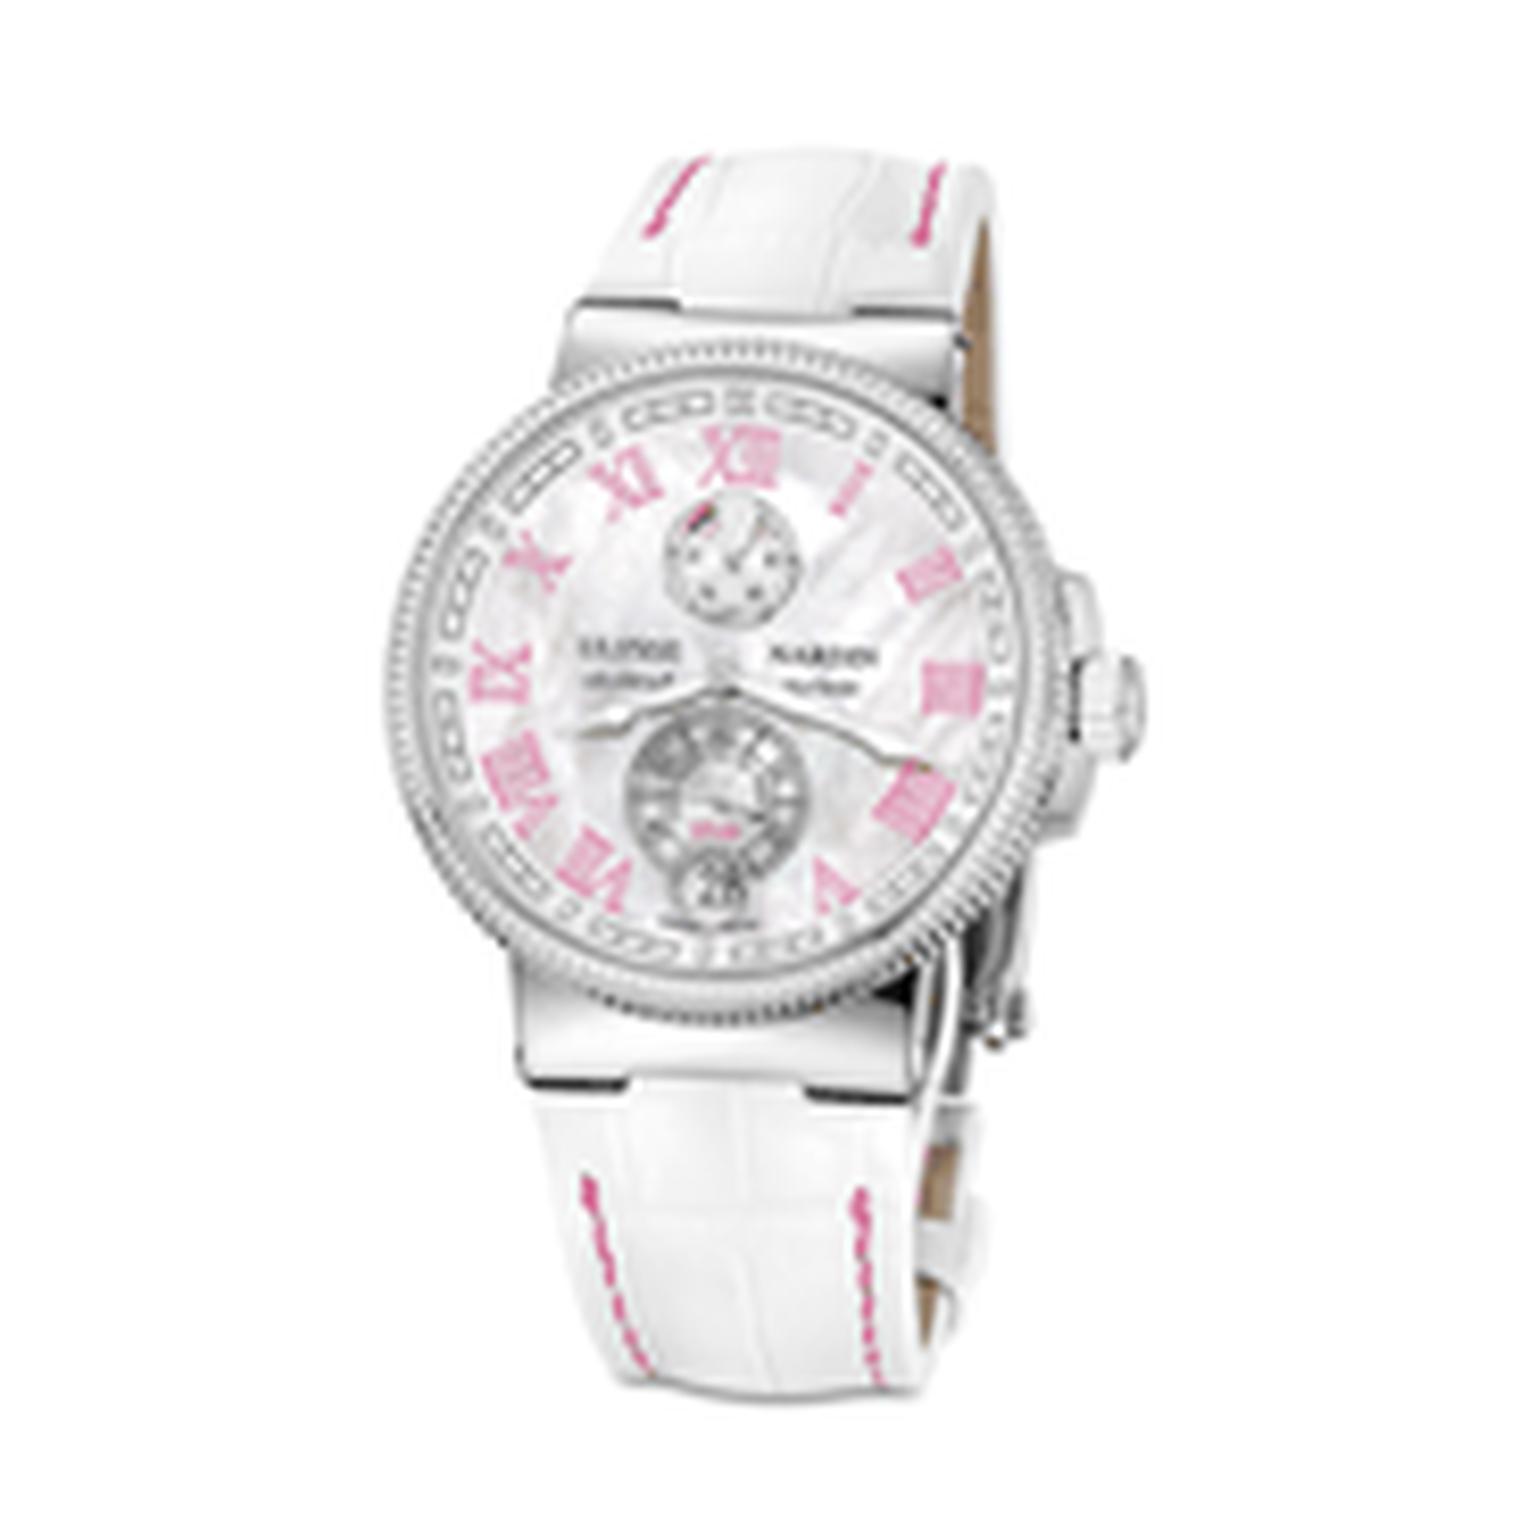 Ulysse Nardin Marine Chronometer 43mm ladies watch in pink_thumb